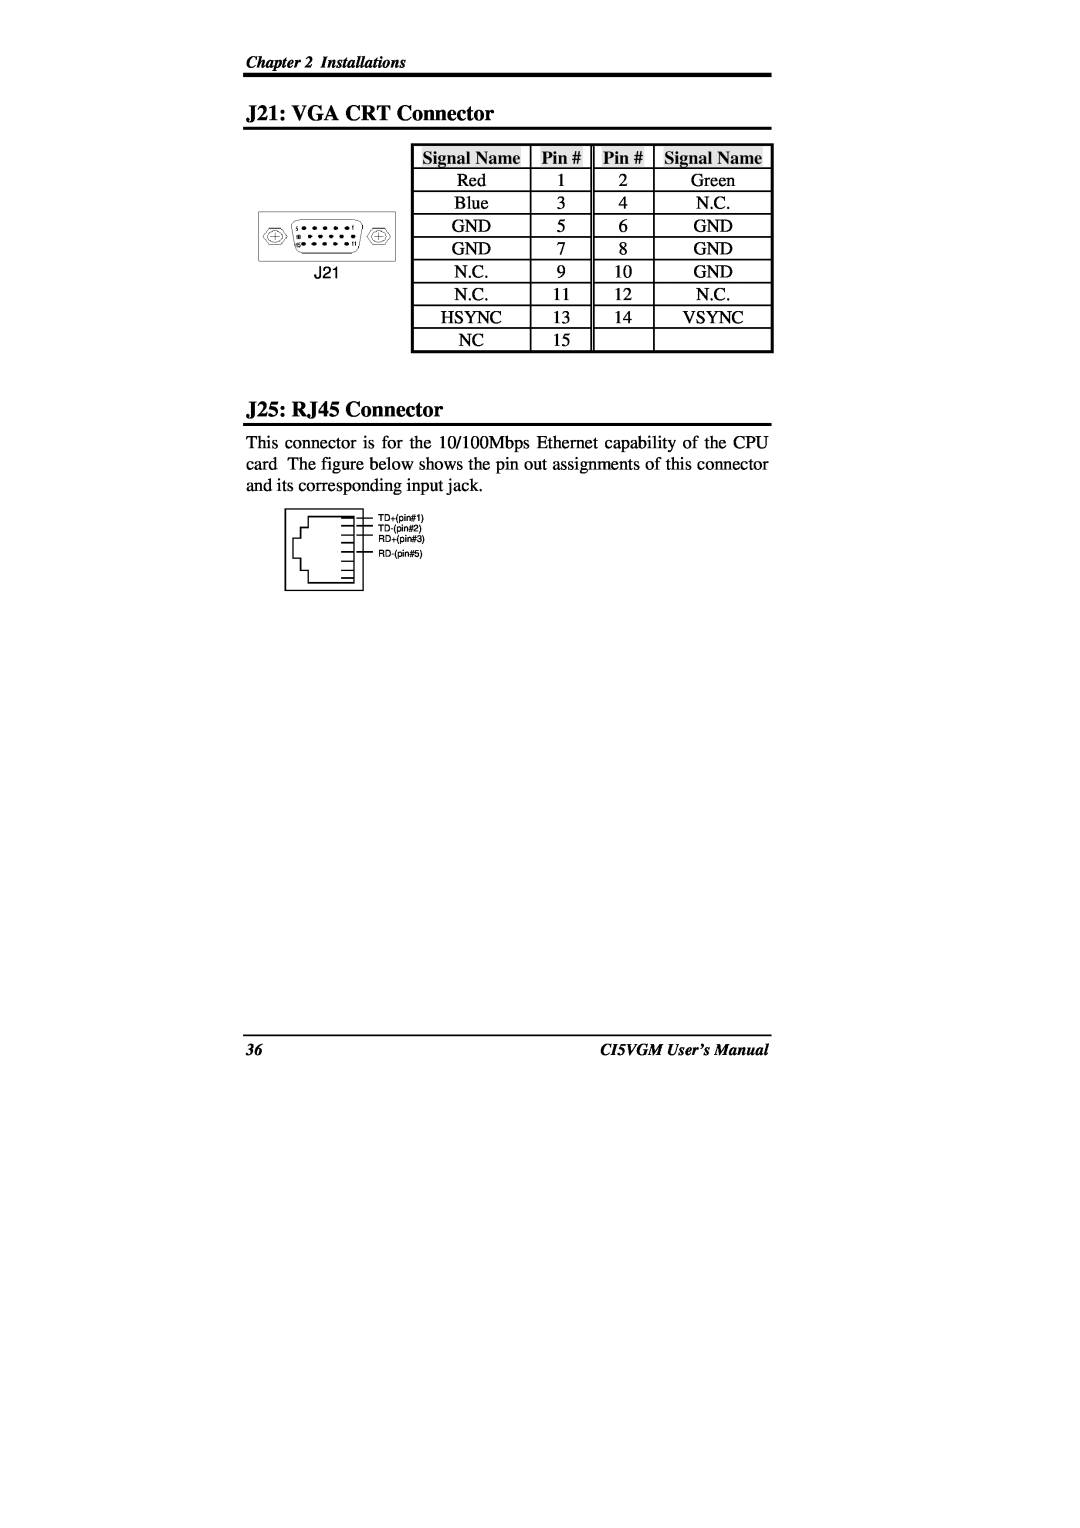 IBM CI5VGM Series user manual J21 VGA CRT Connector, J25 RJ45 Connector, Signal Name, Pin # 